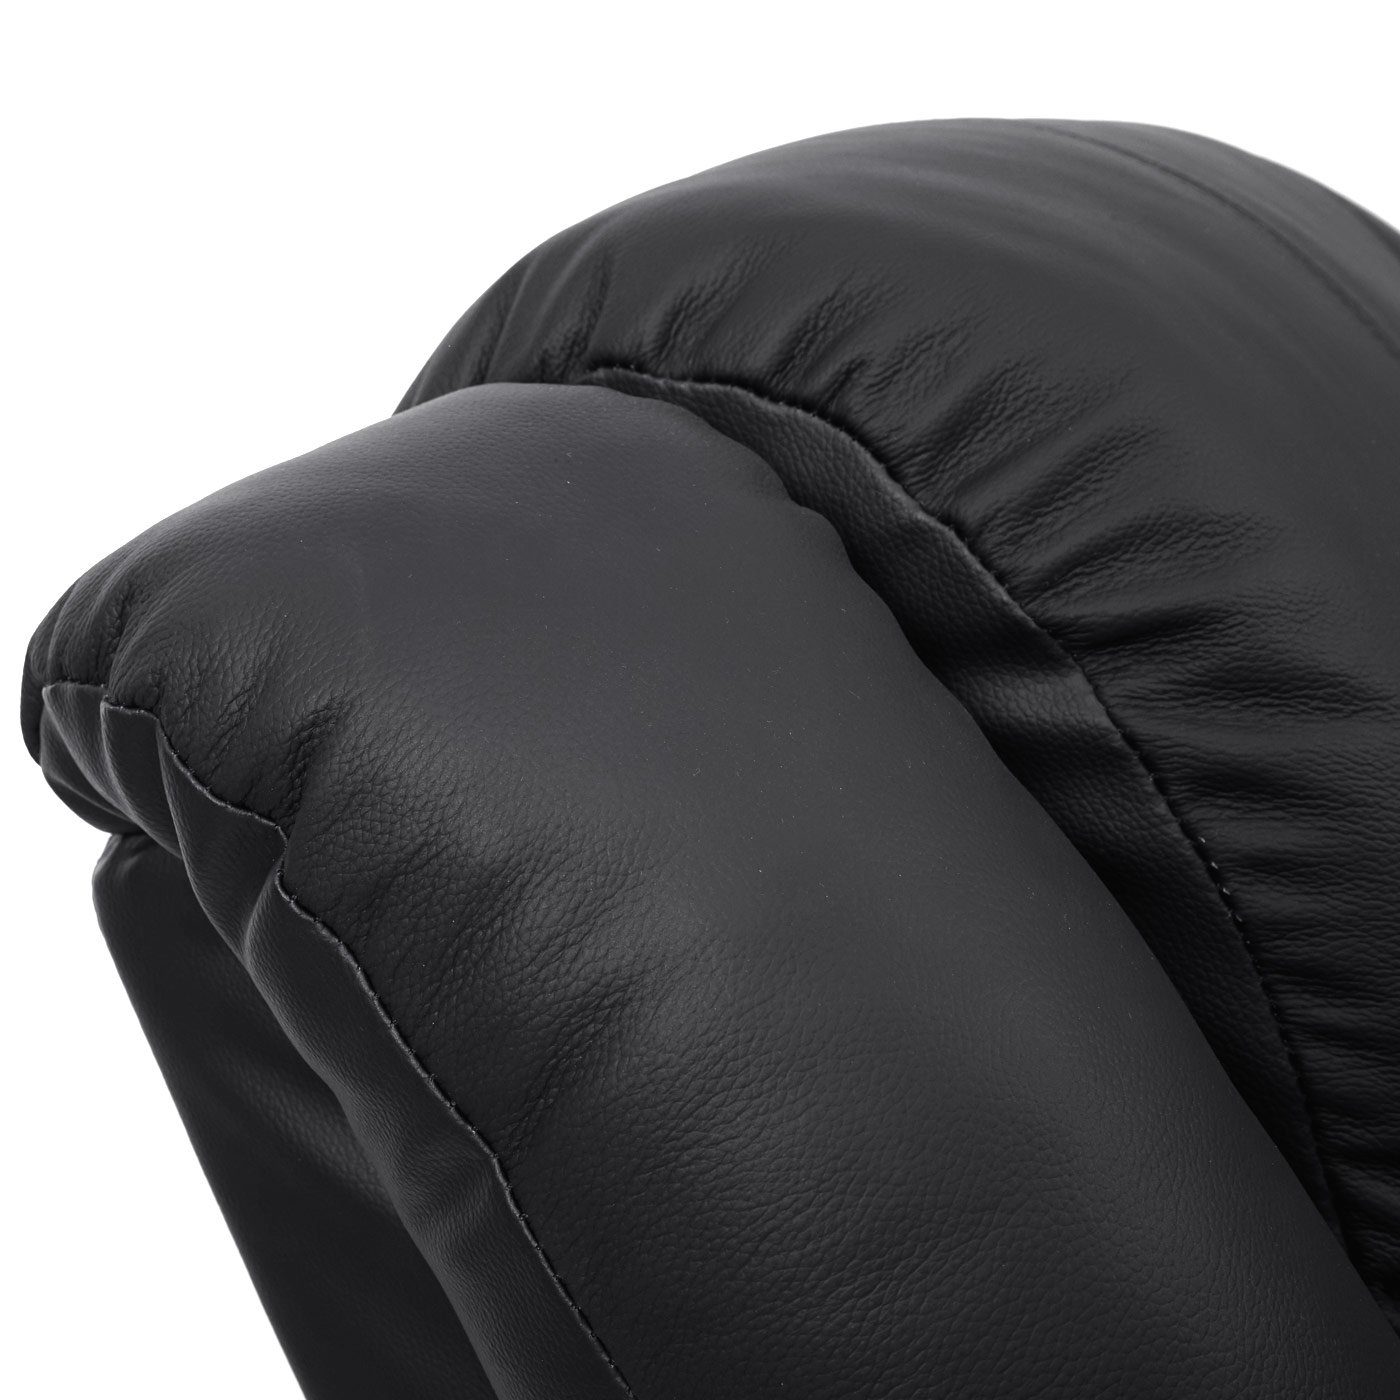 MCW Fußstütze 165 Liegefläche: MCW-G15, TV-Sessel Rückenfläche, schwarz cm, verstellbar, Liegefunktion Verstellbare